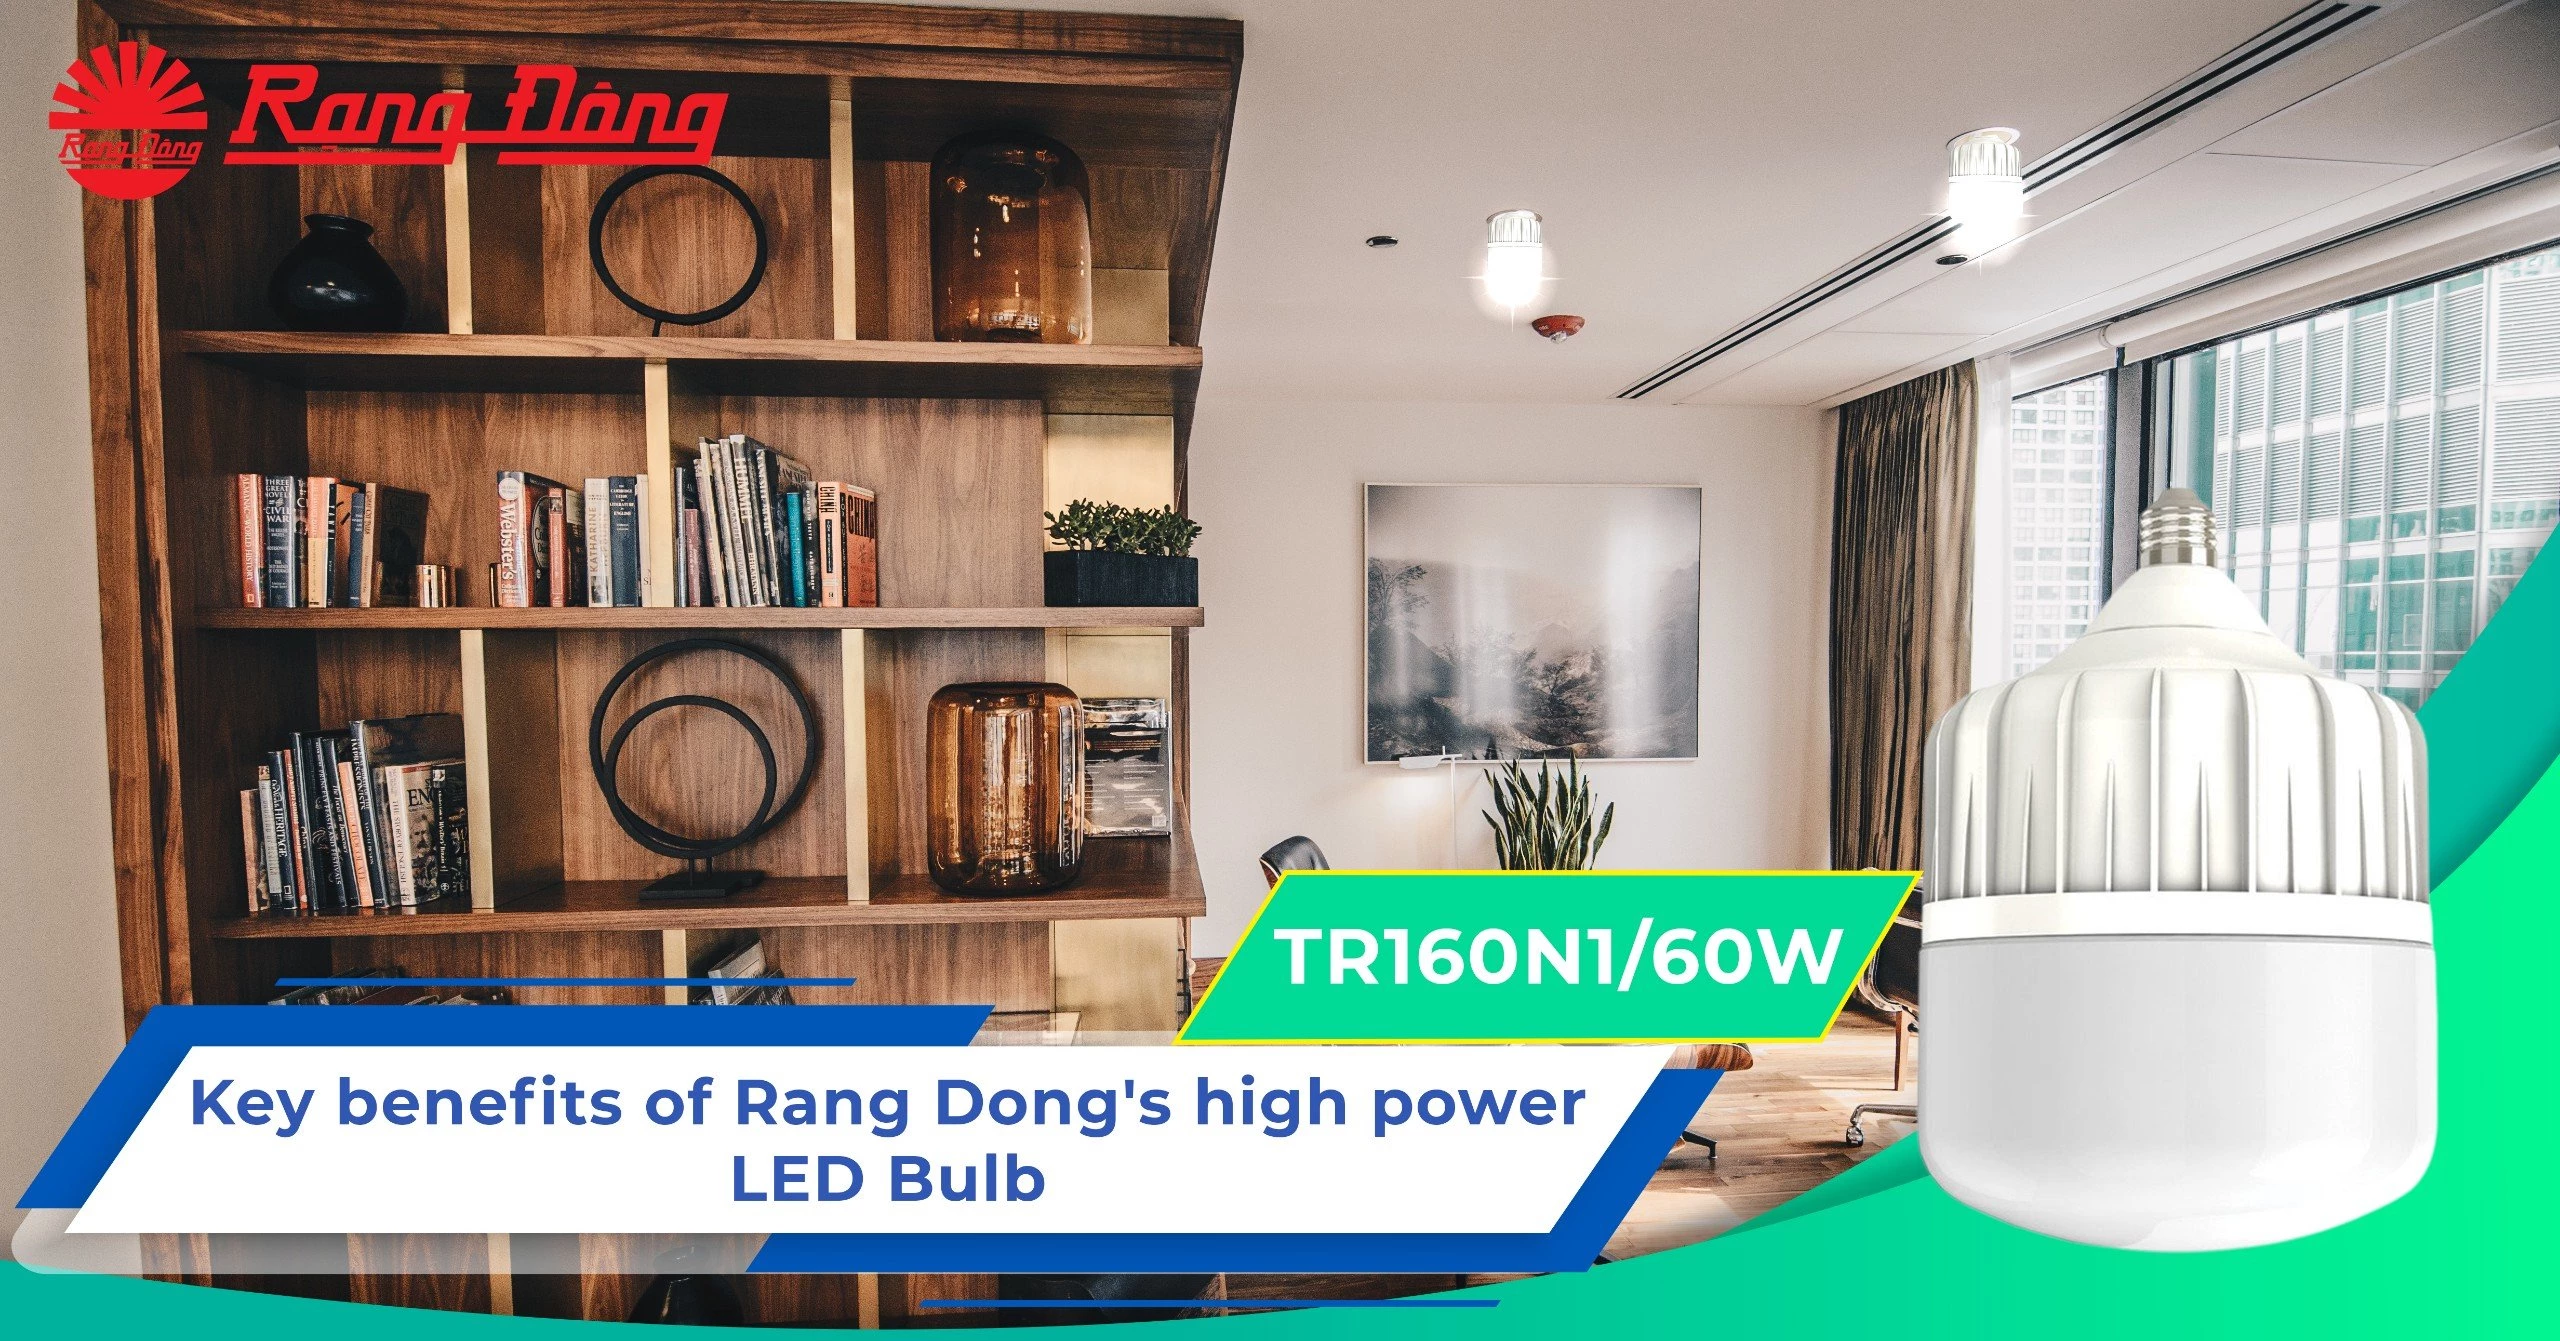 Key benefits of Rang Dong's high power LED Bulb